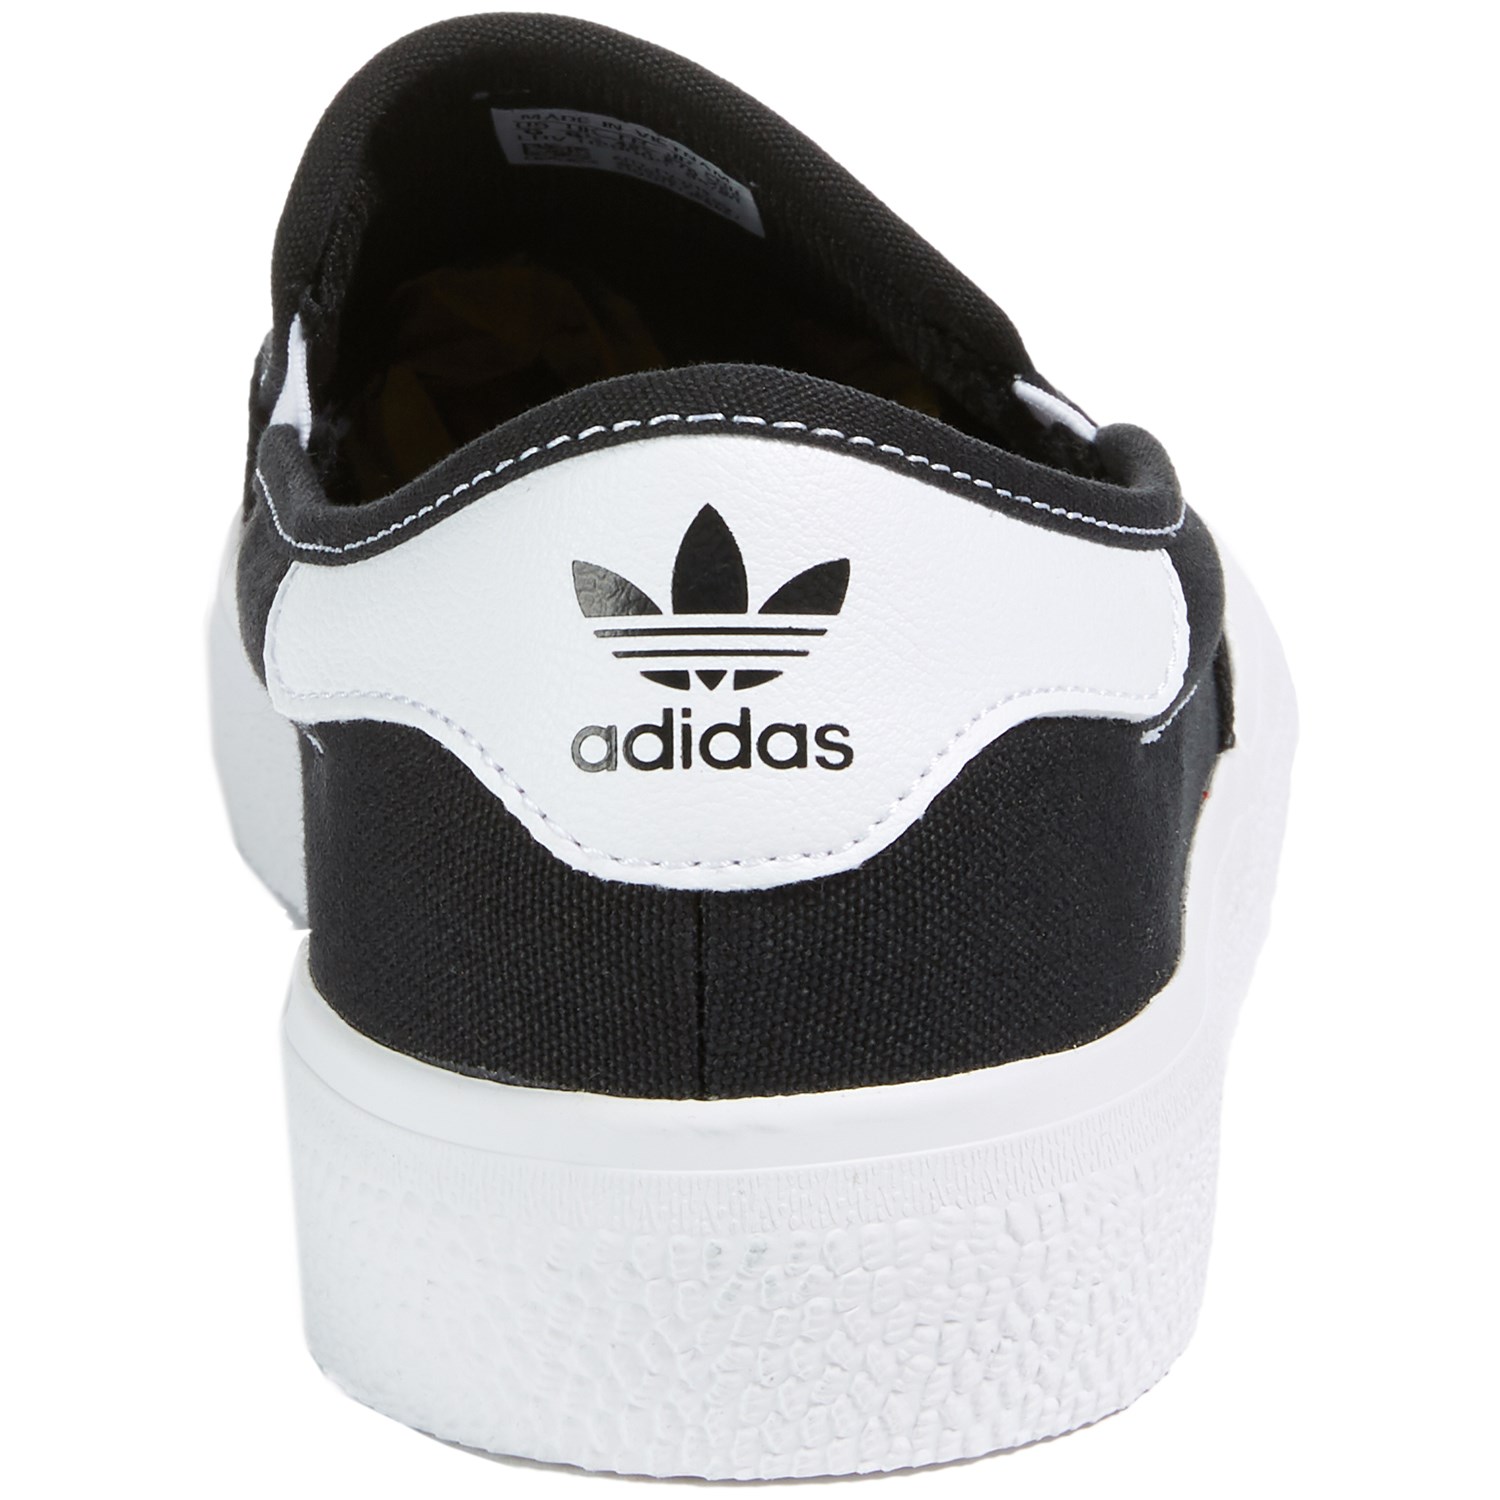 adidas black and white slip on